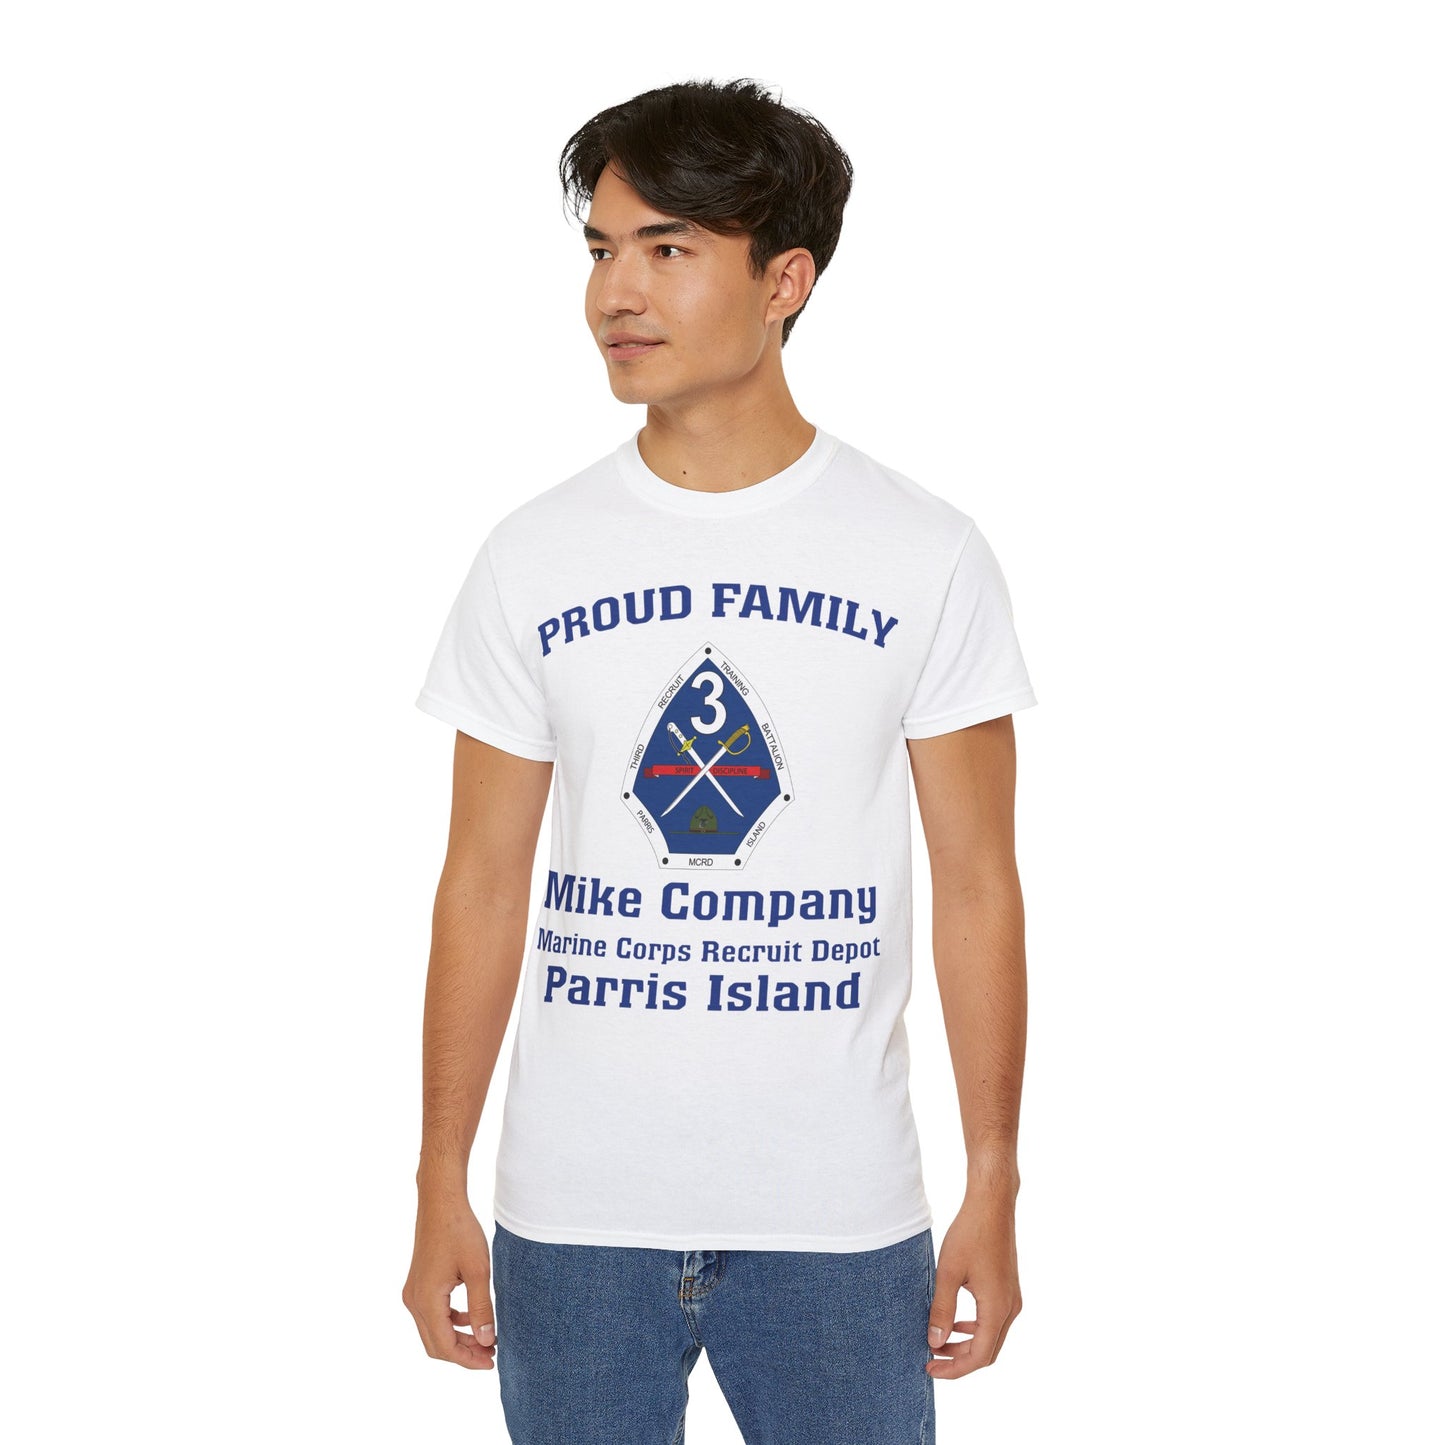 T-Shirt: Mike Co. MCRD Parris Island (3rd Battalion Crest)